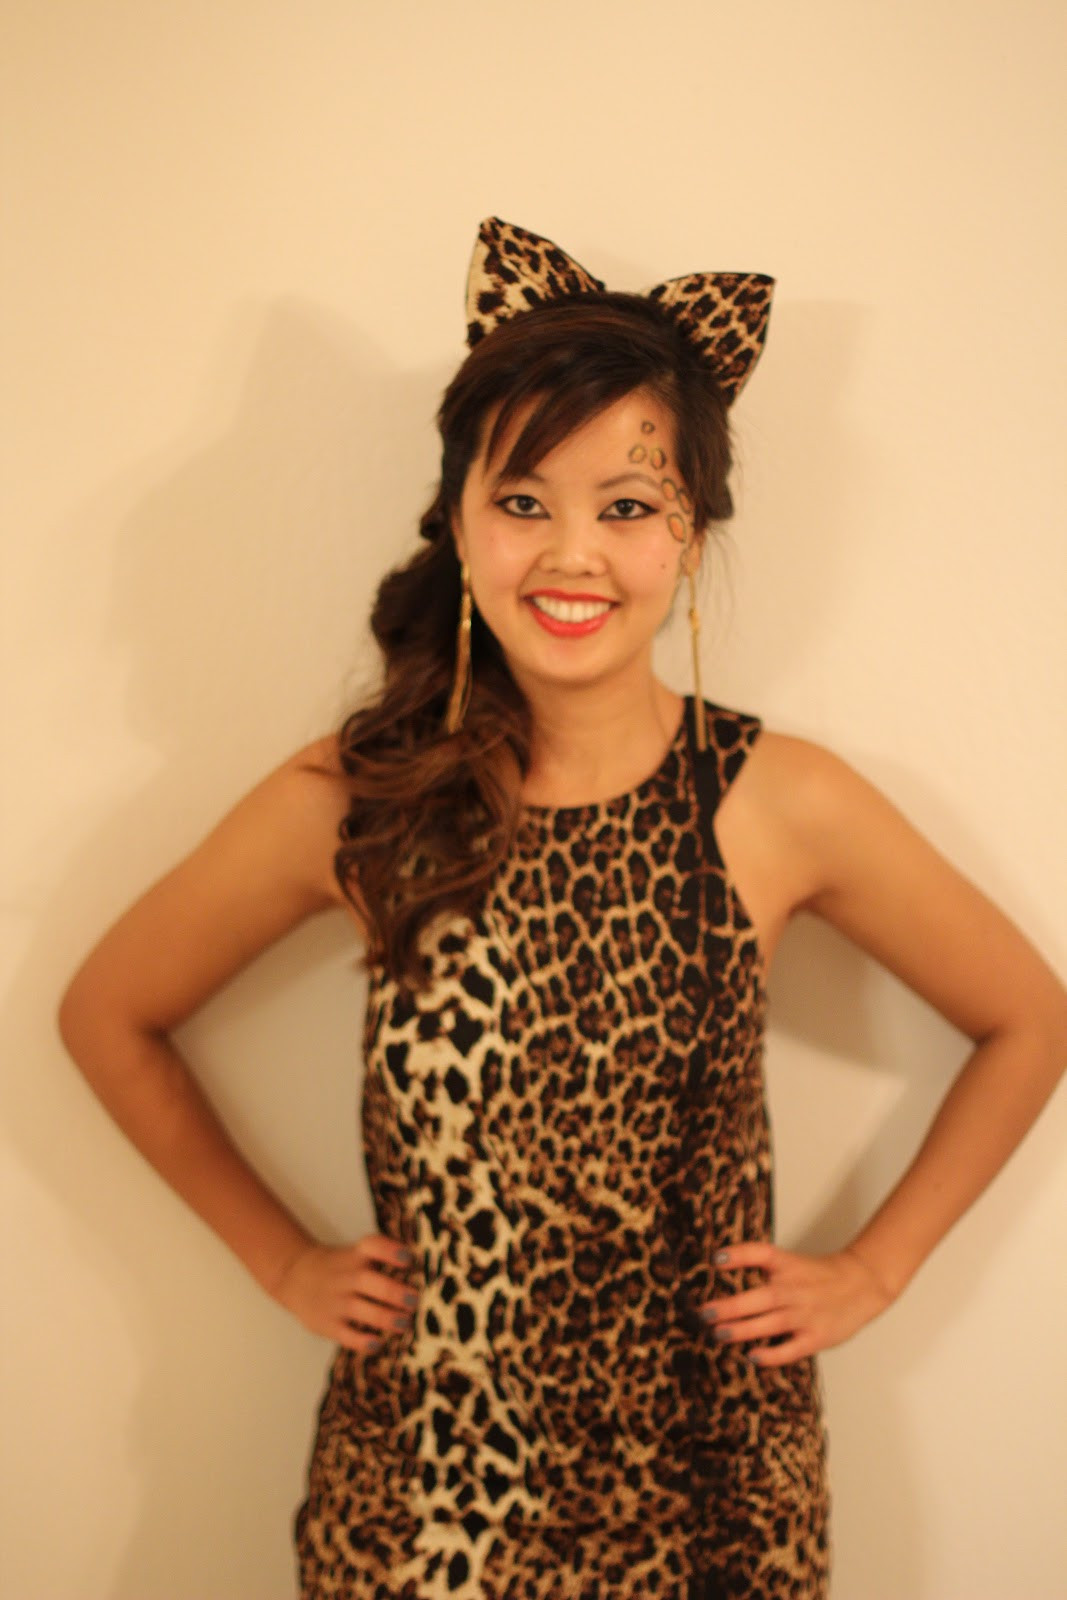 DIY Leopard Costume
 Diy Leopard Halloween Costume